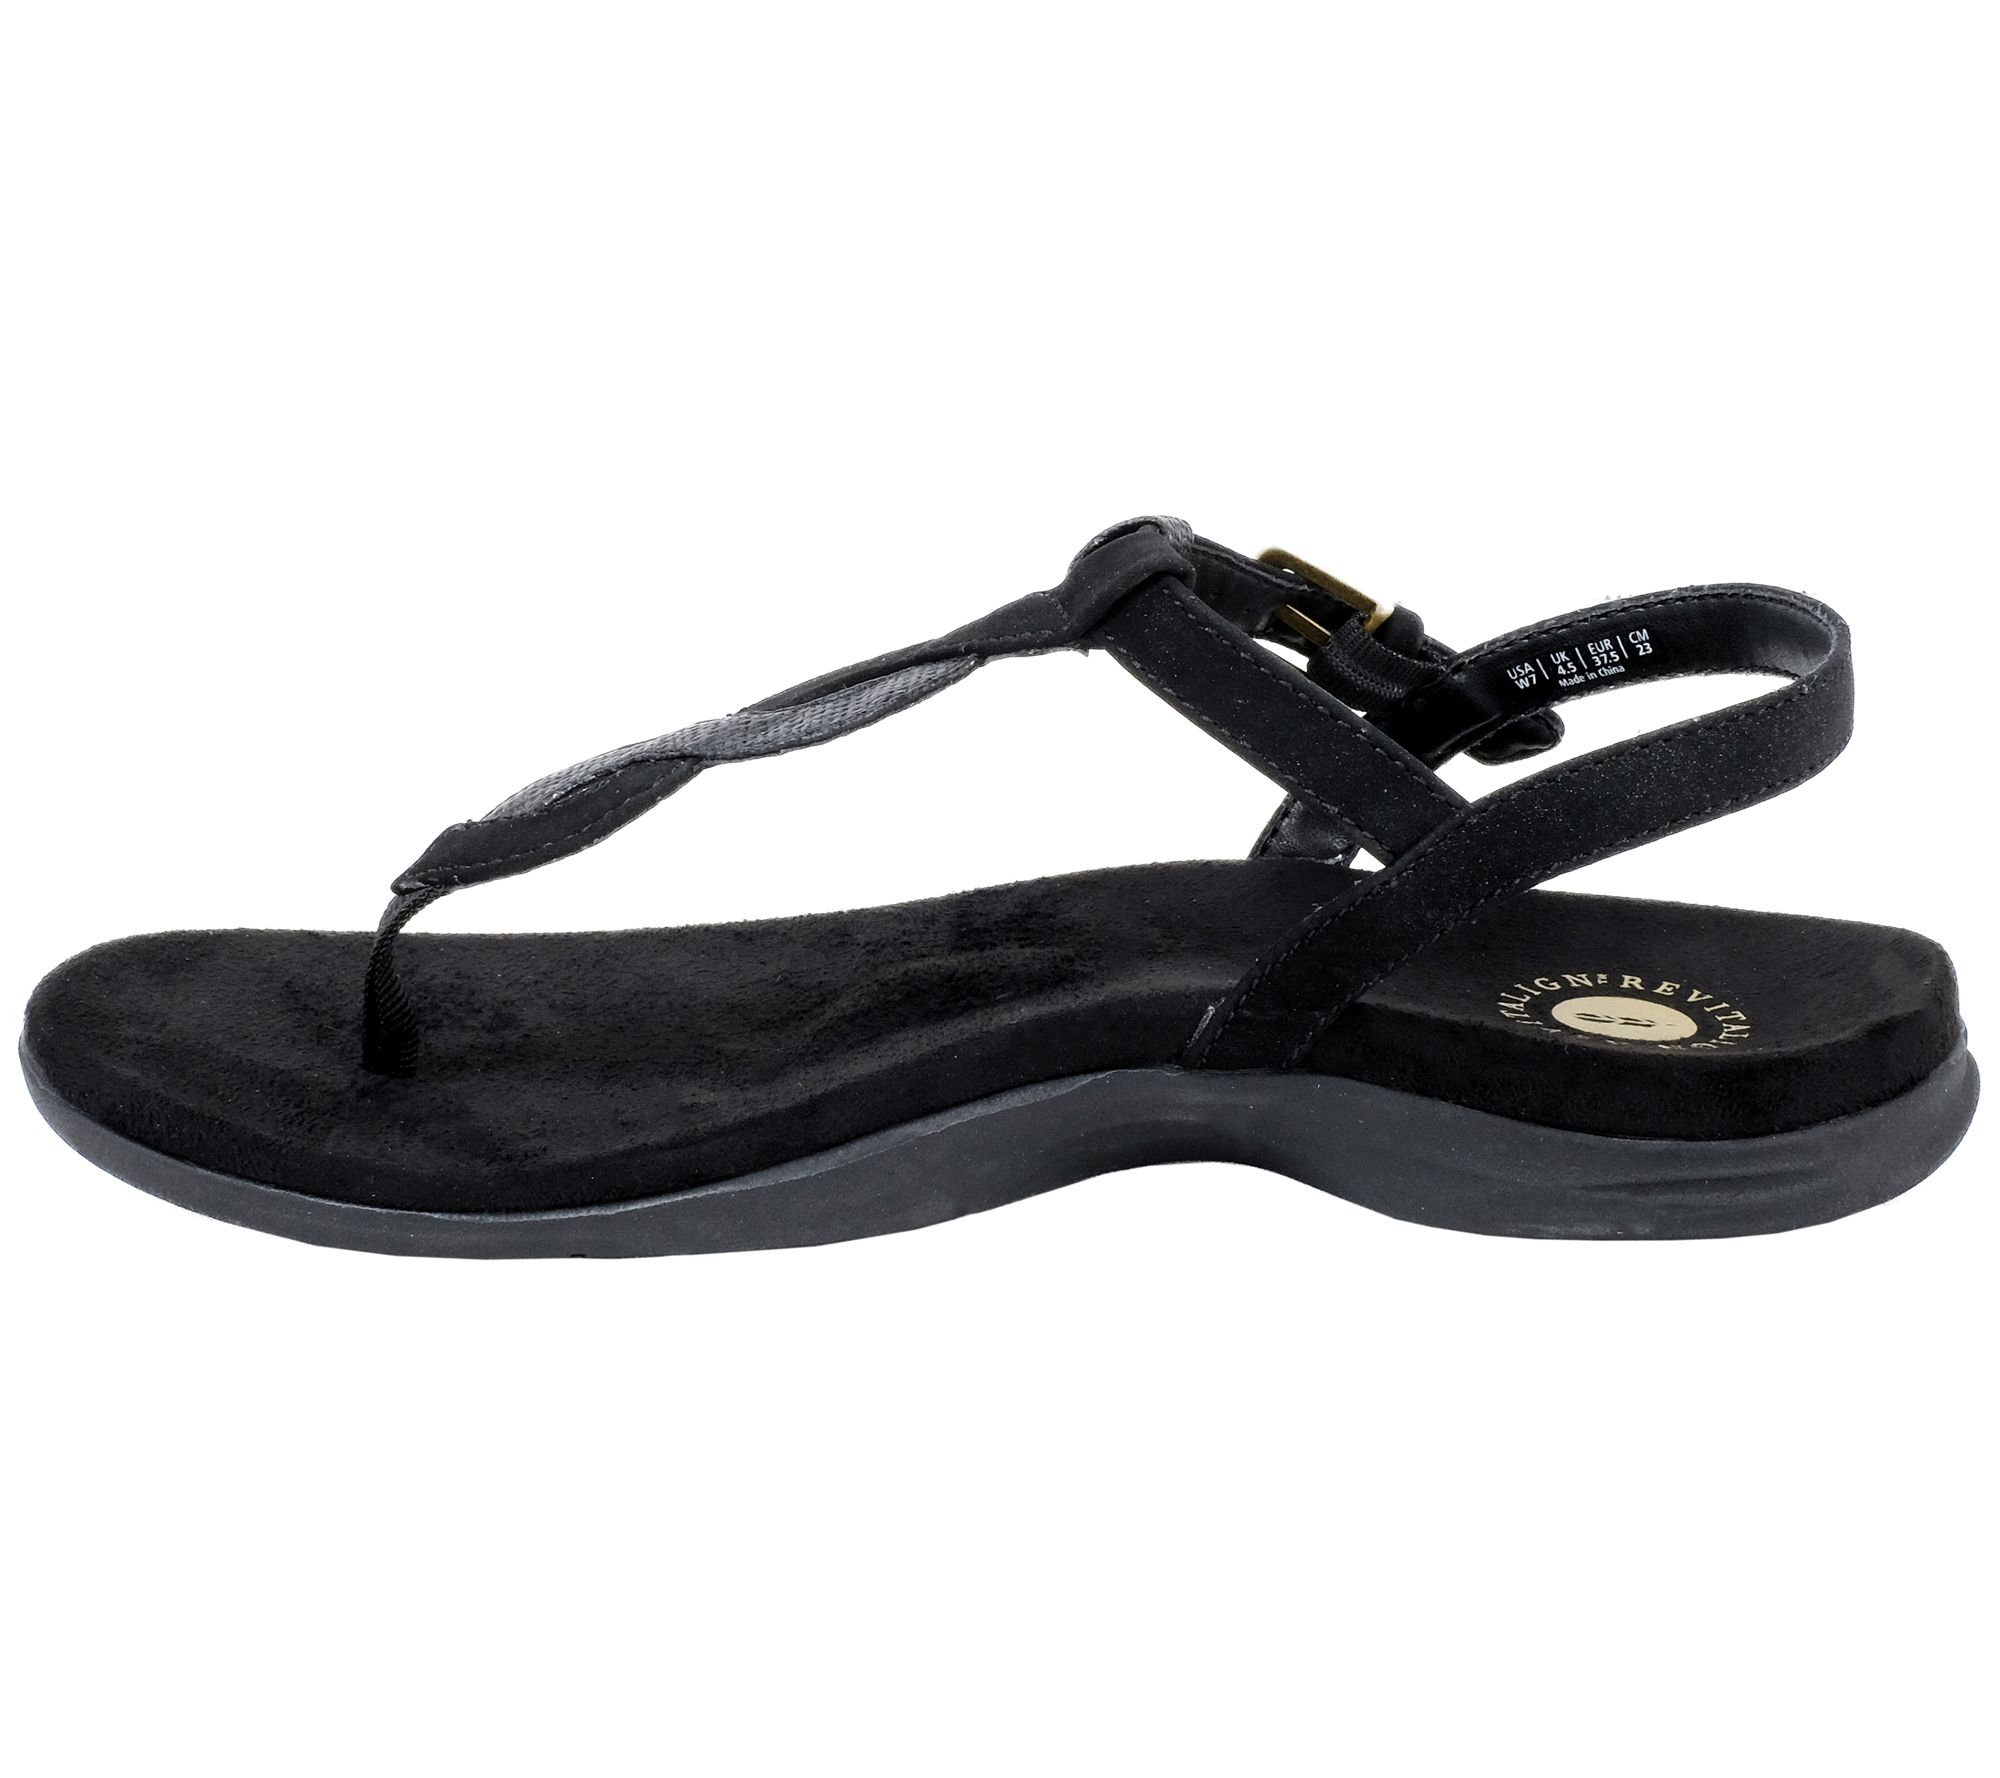 Revitalign Adjustable Orthotic Sandals - Heron-Bar - QVC.com